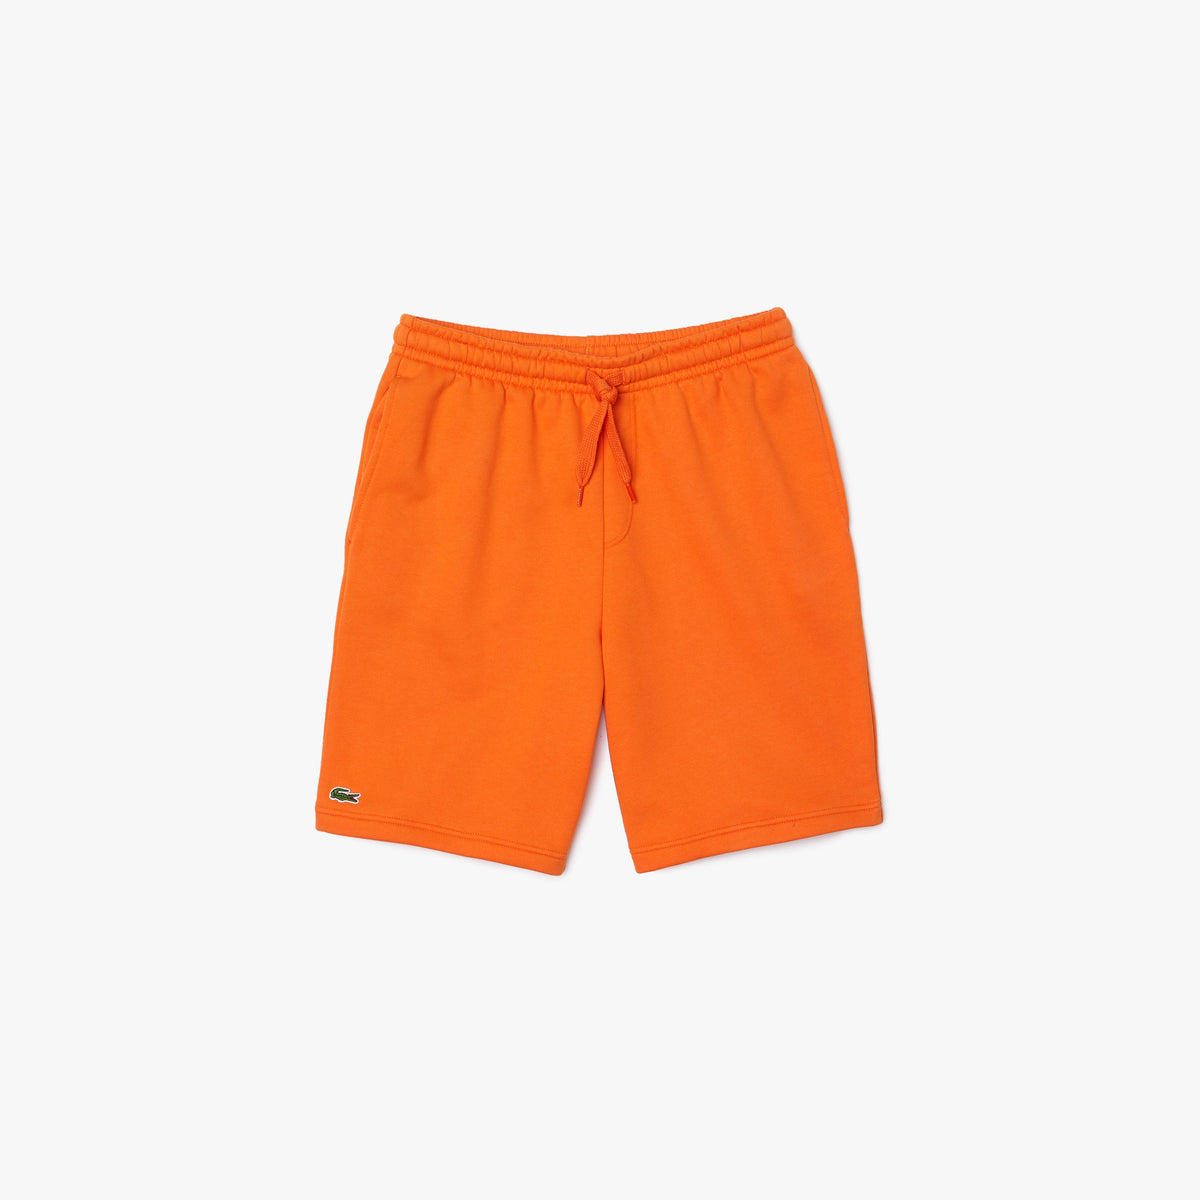 LaCoste-Men's Sport Tennis Fleece Shorts - Orange TV1